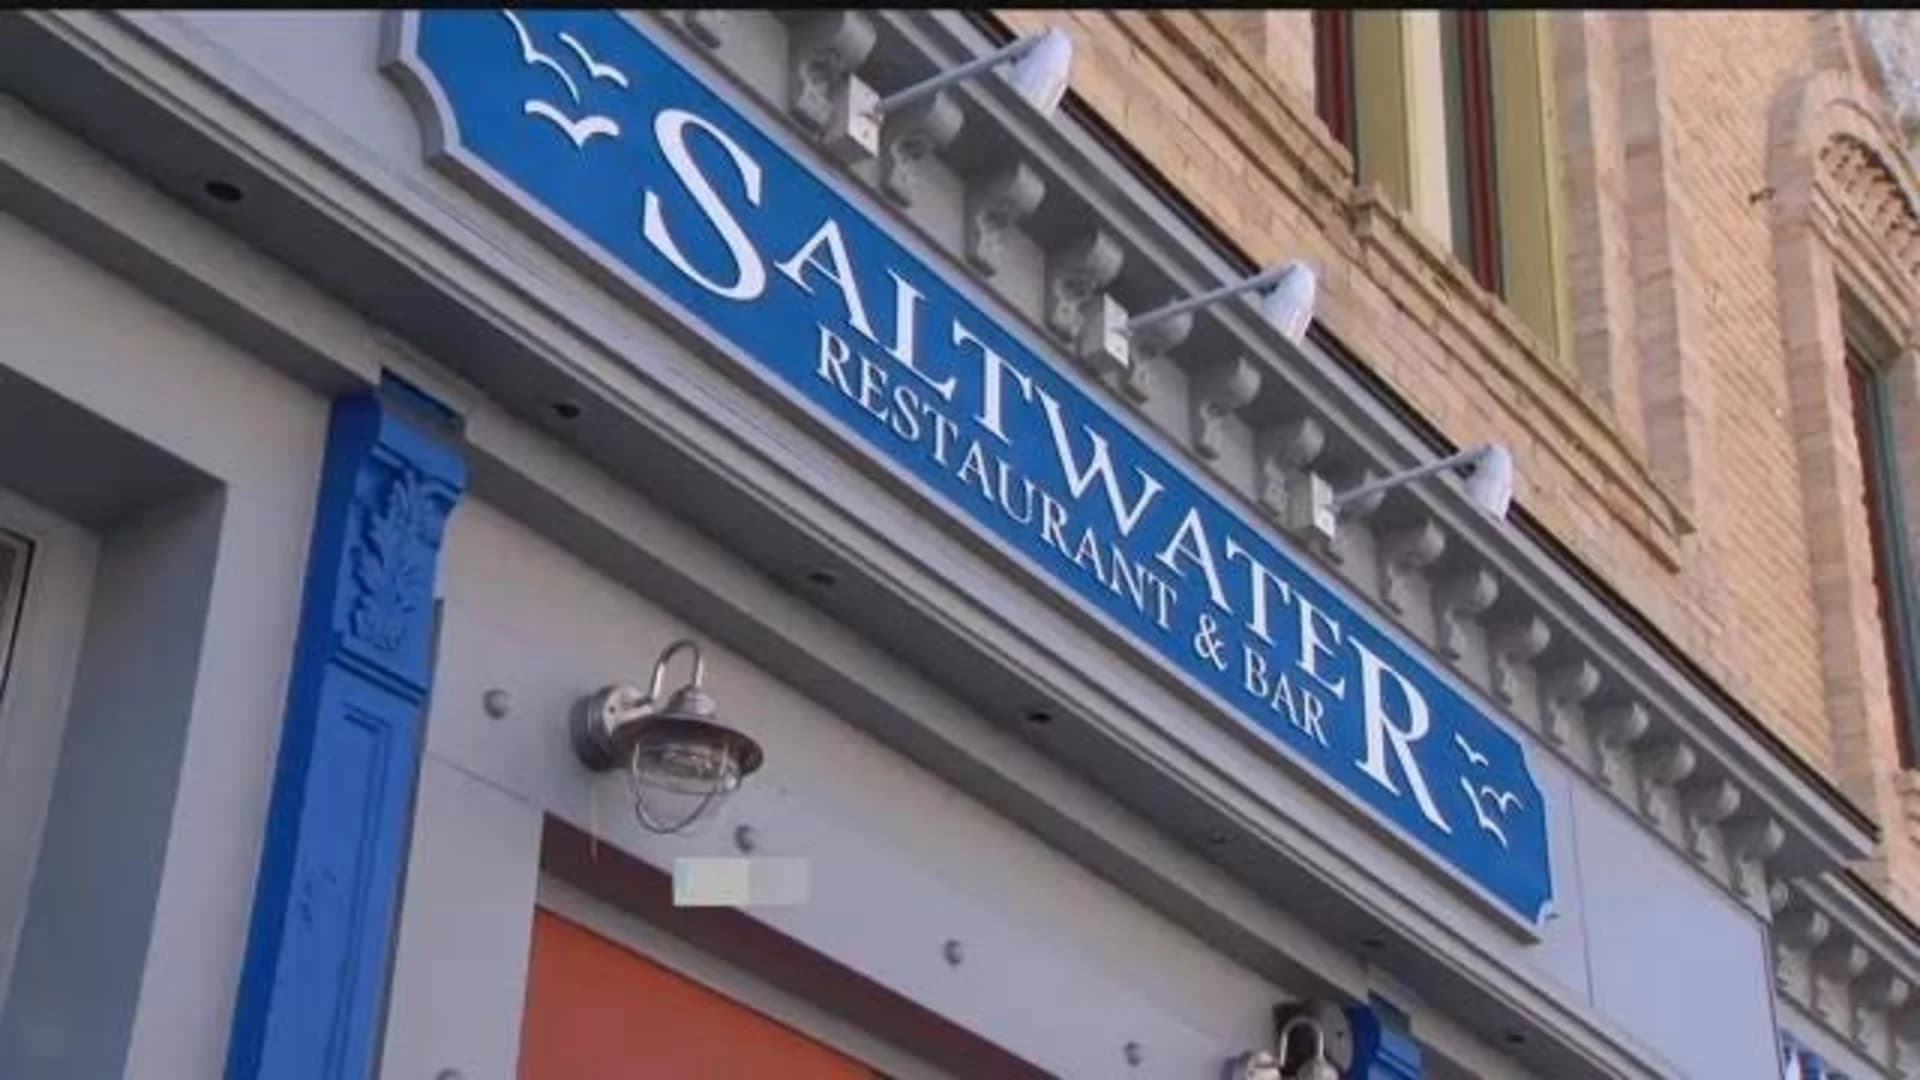 Tasty Tuesday: Saltwater Restaurant & Bar